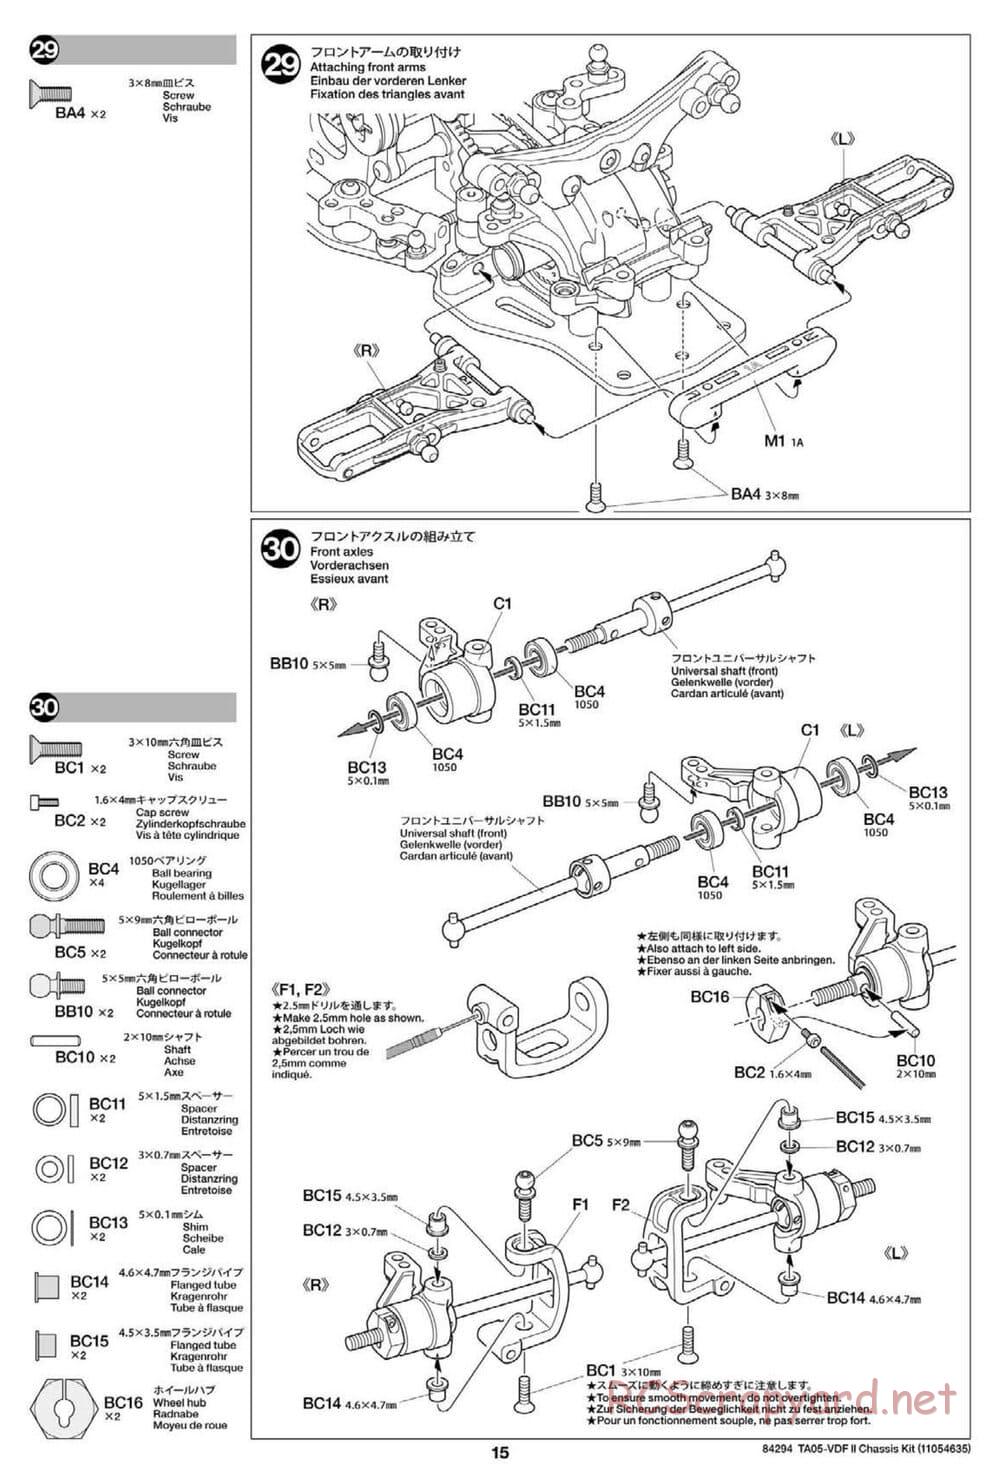 Tamiya - TA05-VDF II Drift Chassis - Manual - Page 15